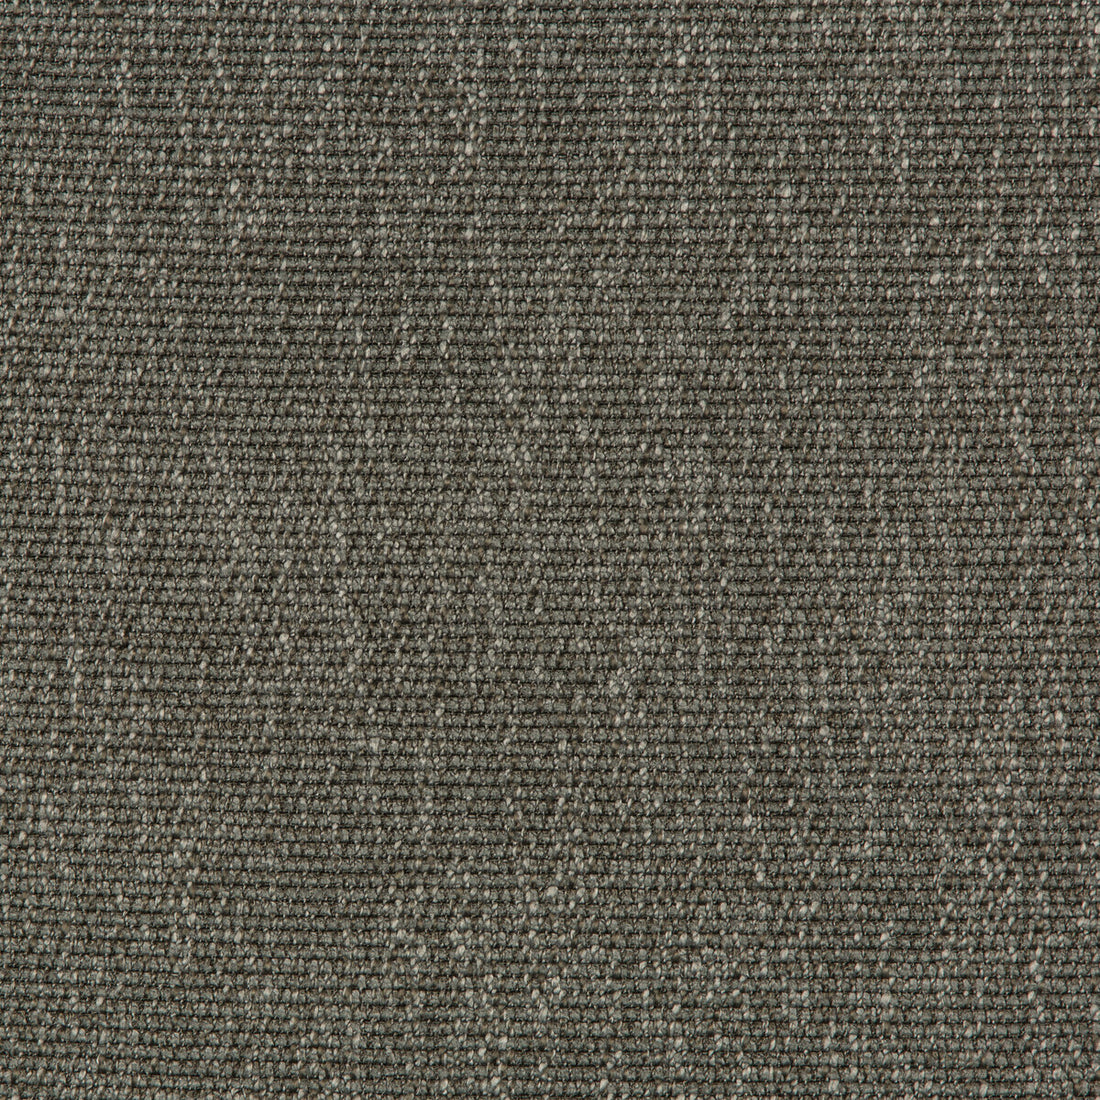 Kravet Smart fabric in 35943-21 color - pattern 35943.21.0 - by Kravet Smart in the Performance Kravetarmor collection